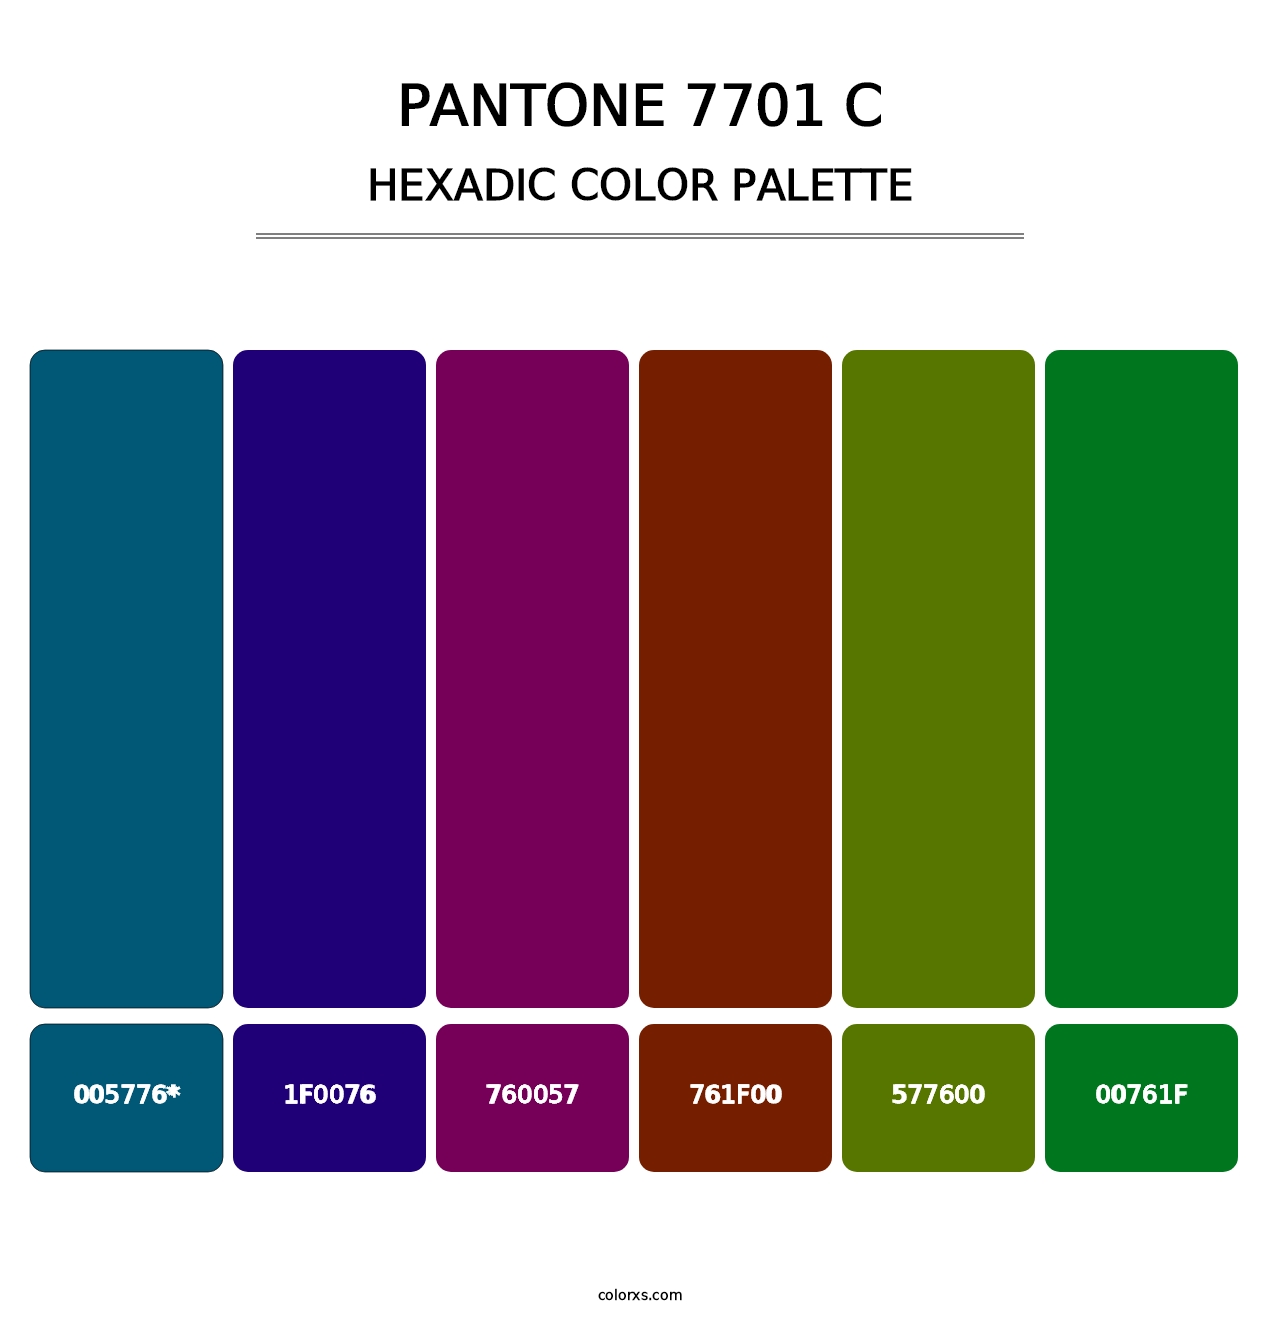 PANTONE 7701 C - Hexadic Color Palette